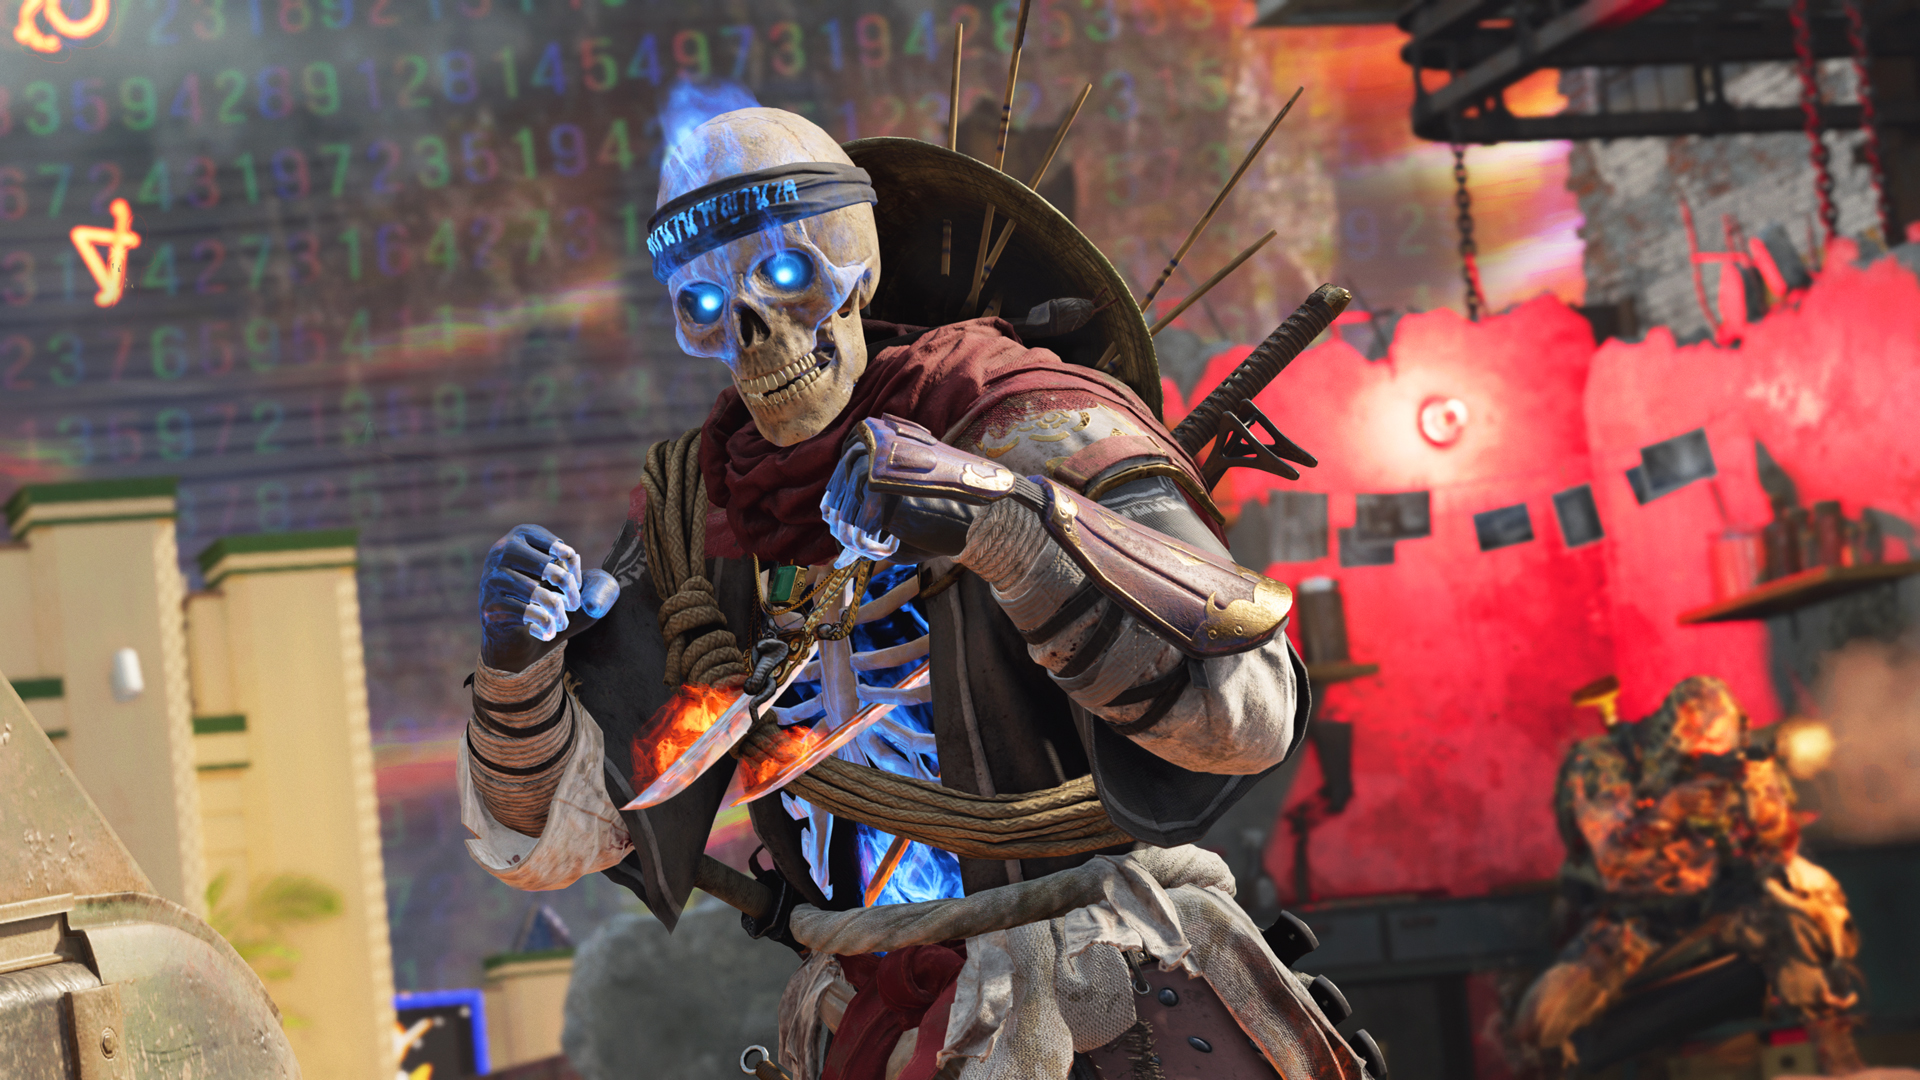 DIY Call of Duty Ghosts Skull Mask: Halloween Achievement Unlocked «  Halloween Ideas :: WonderHowTo